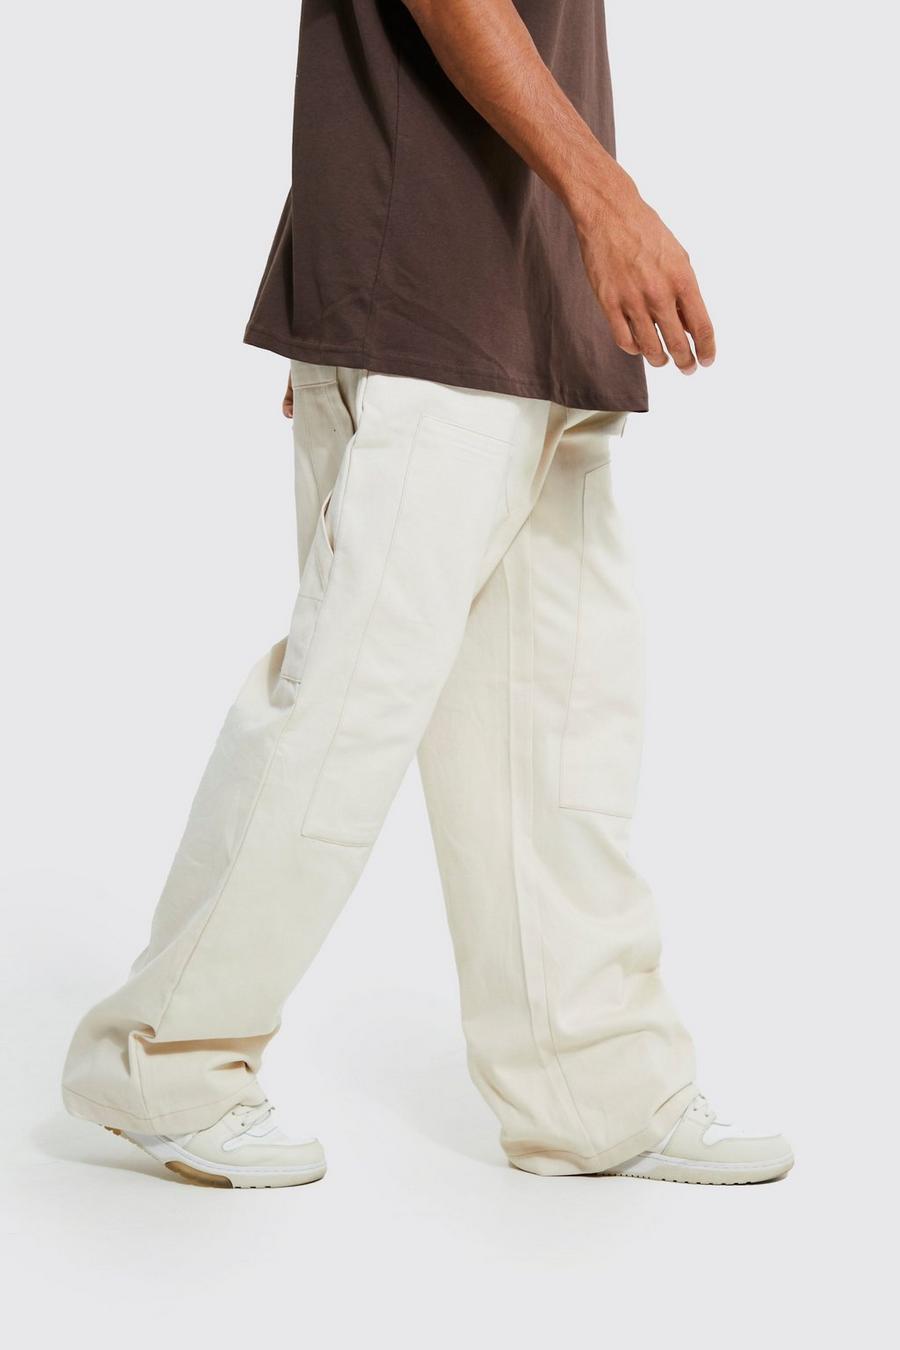 Pantalón Tall ancho grueso estilo obrero, Ecru bianco image number 1